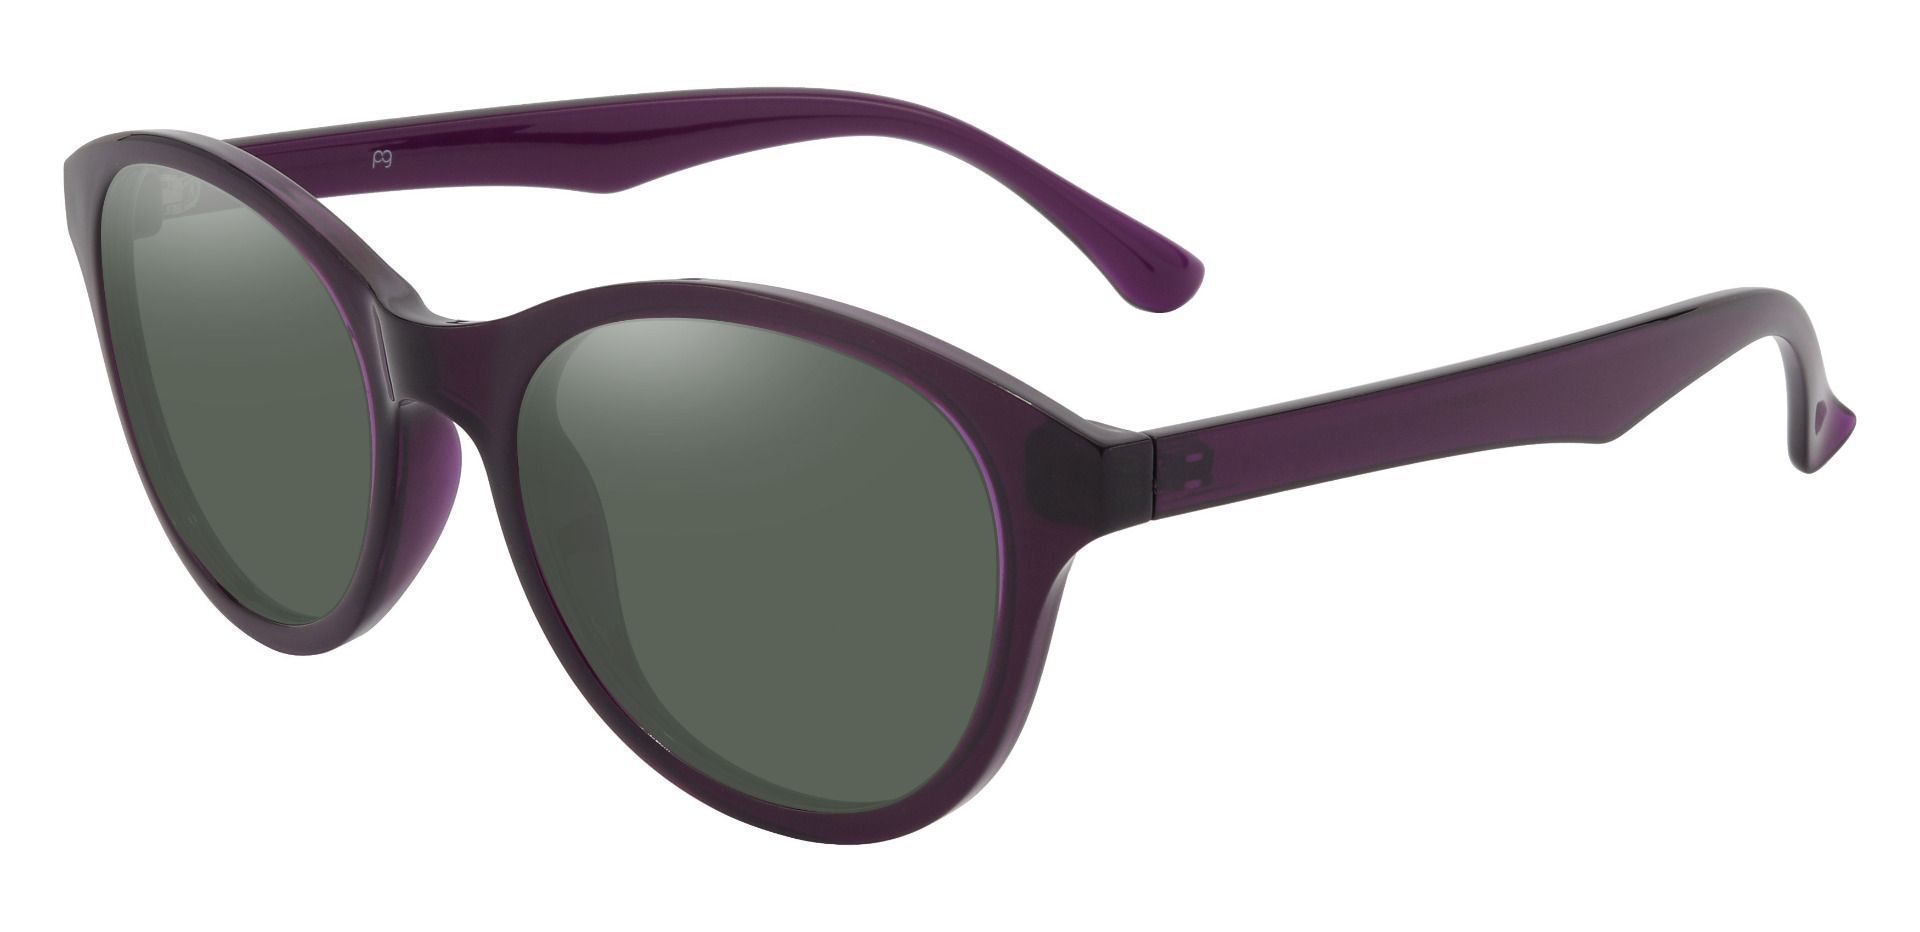 Angelina Round Prescription Sunglasses - Purple Frame With Green Lenses